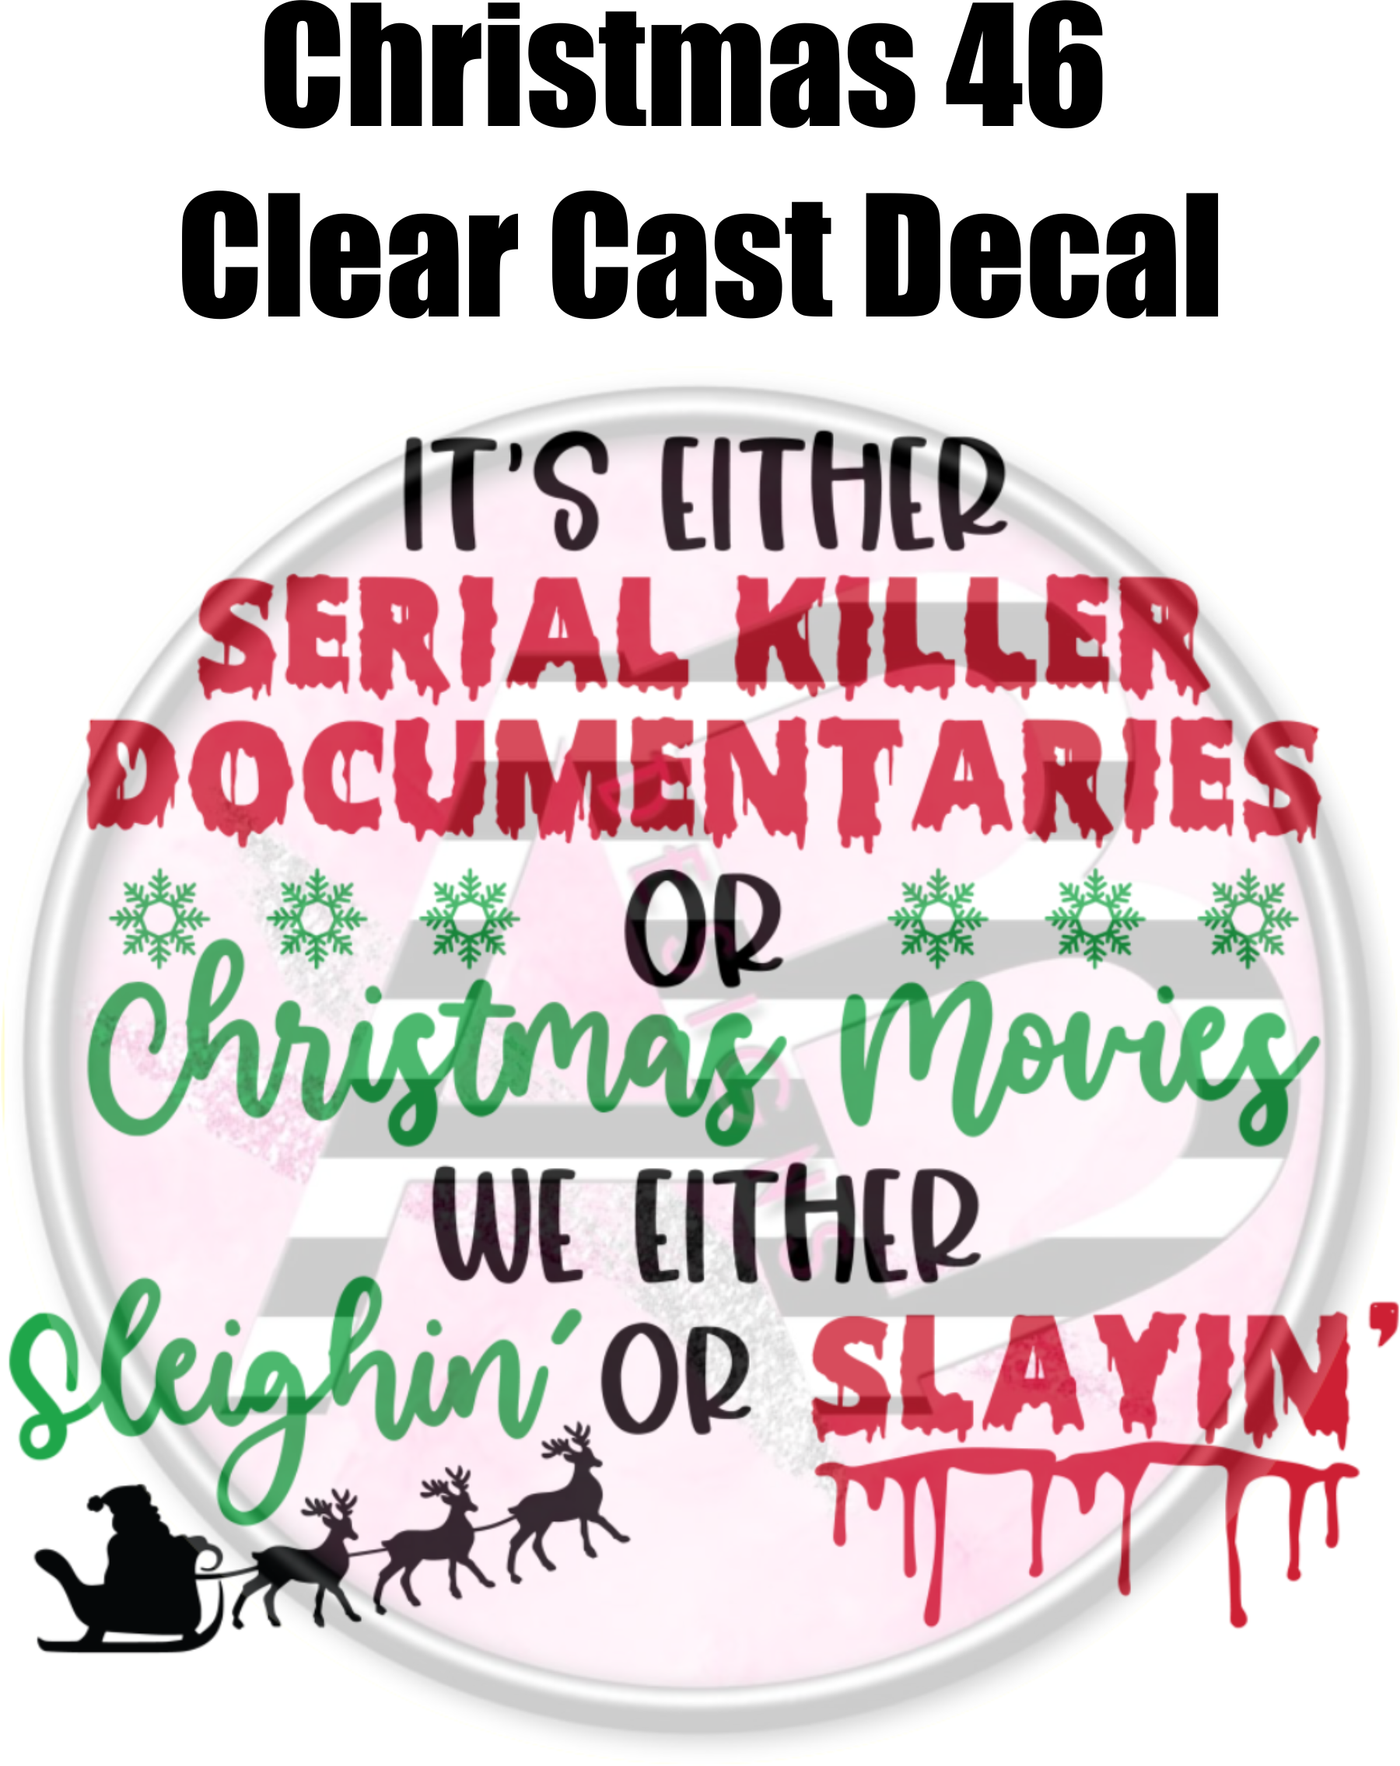 Christmas 46 - Clear Cast Decal